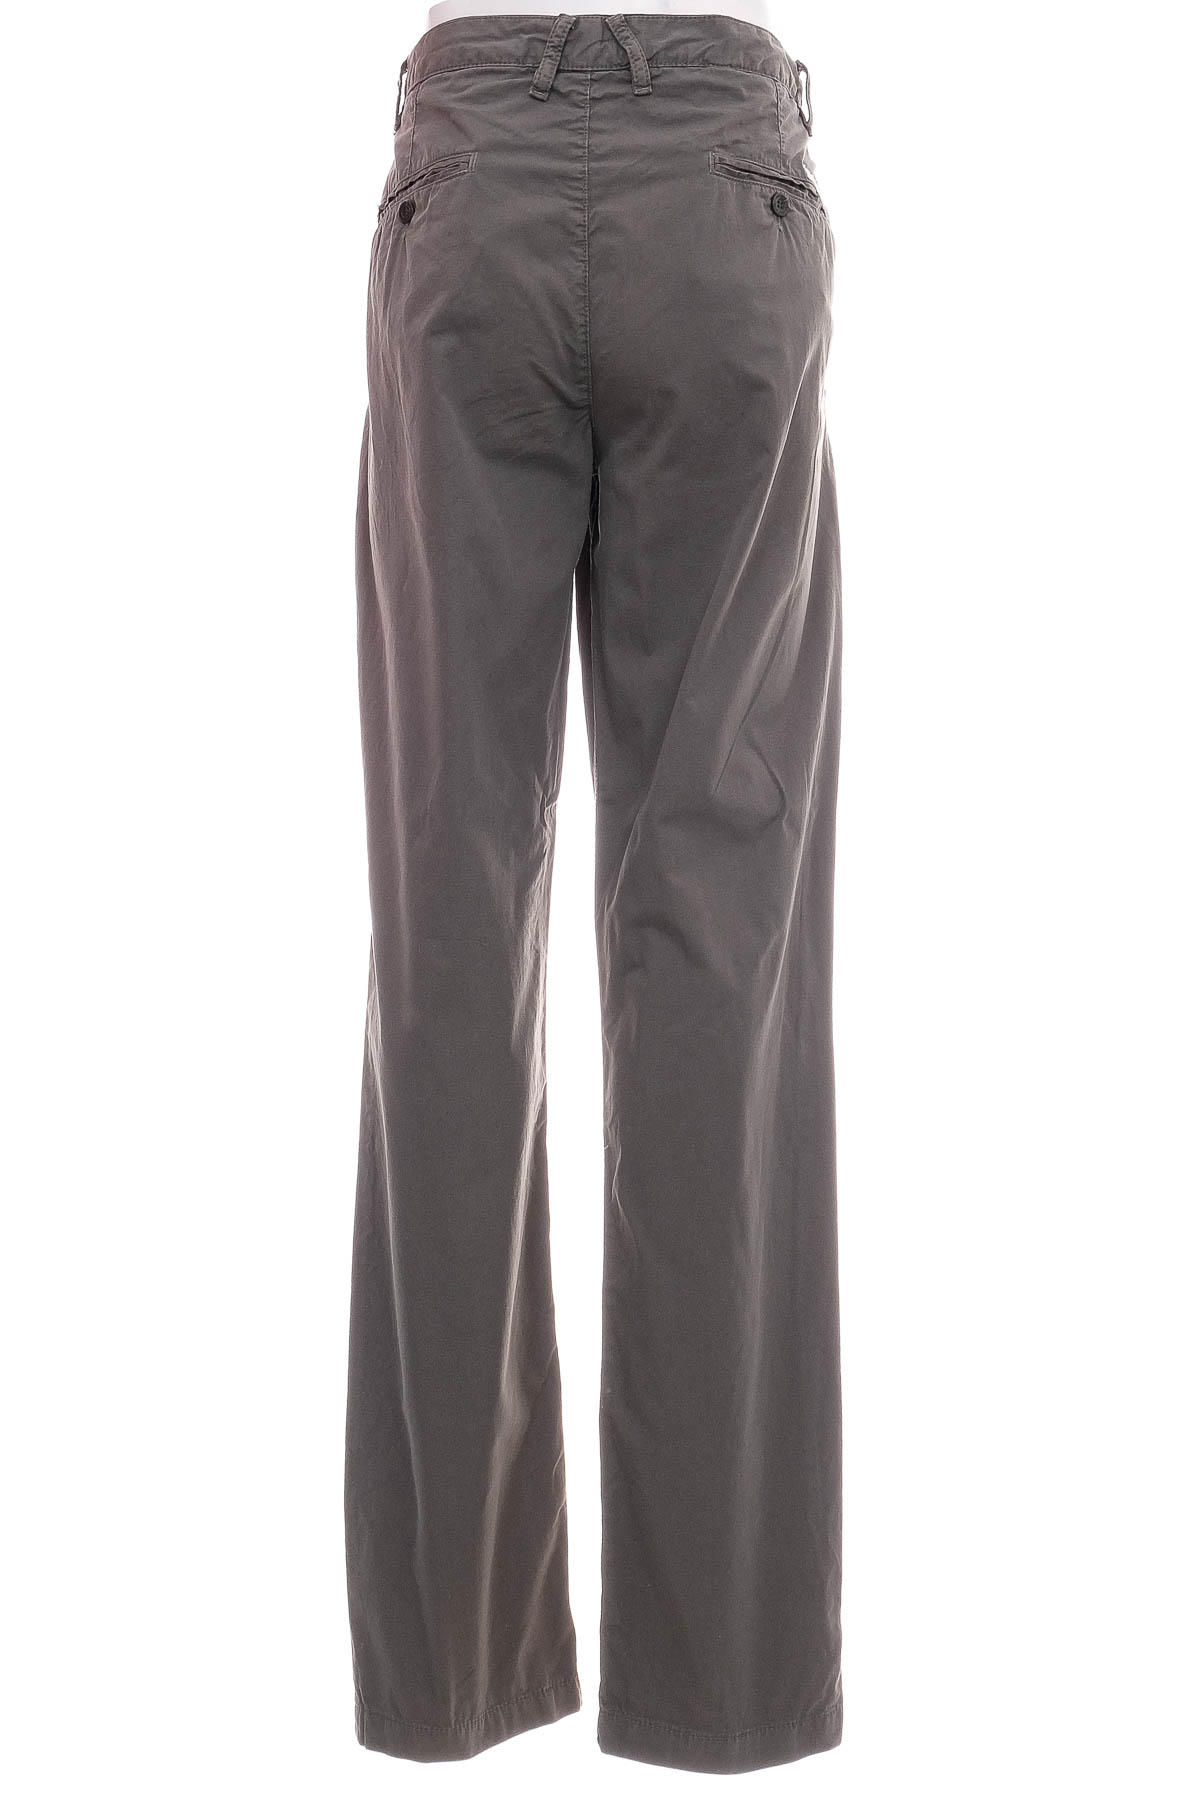 Men's trousers - U.S. Polo ASSN. - 1